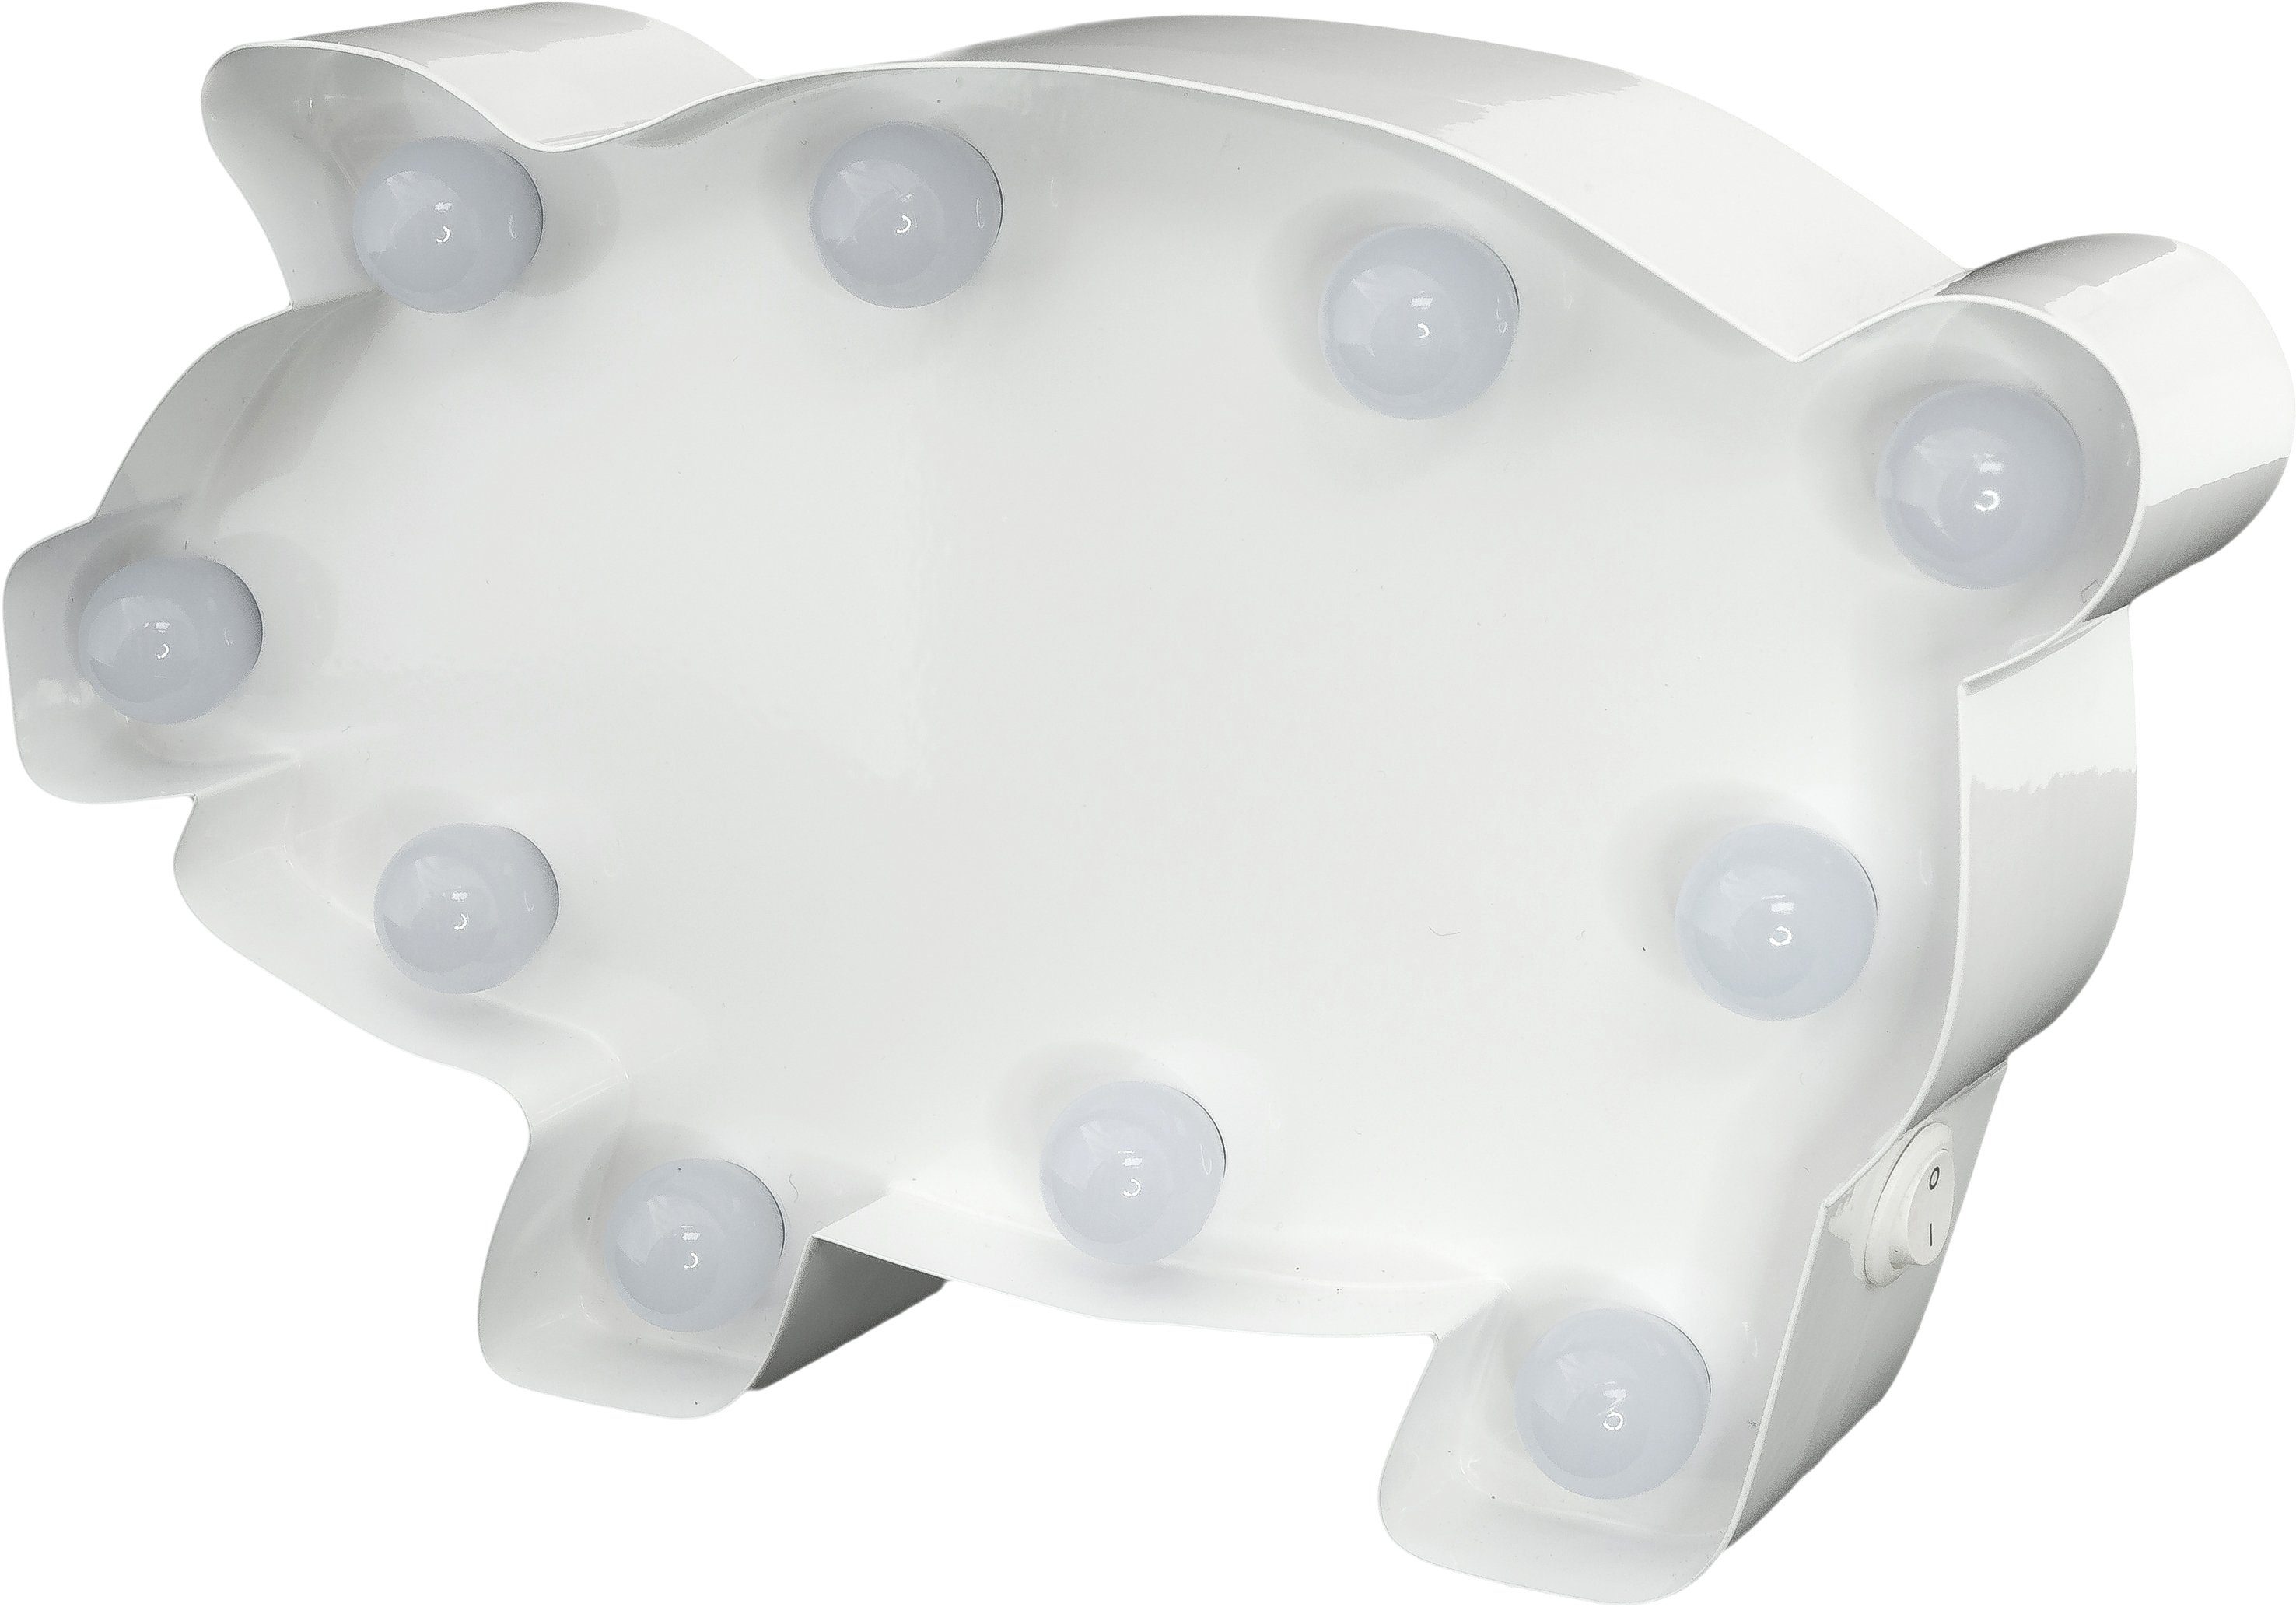 fest LIGHTS MARQUEE Dekolicht LED festverbauten LEDs LED integriert, Warmweiß, - cm Tischlampe Wandlampe, 23x14 mit Pig, Pig 10